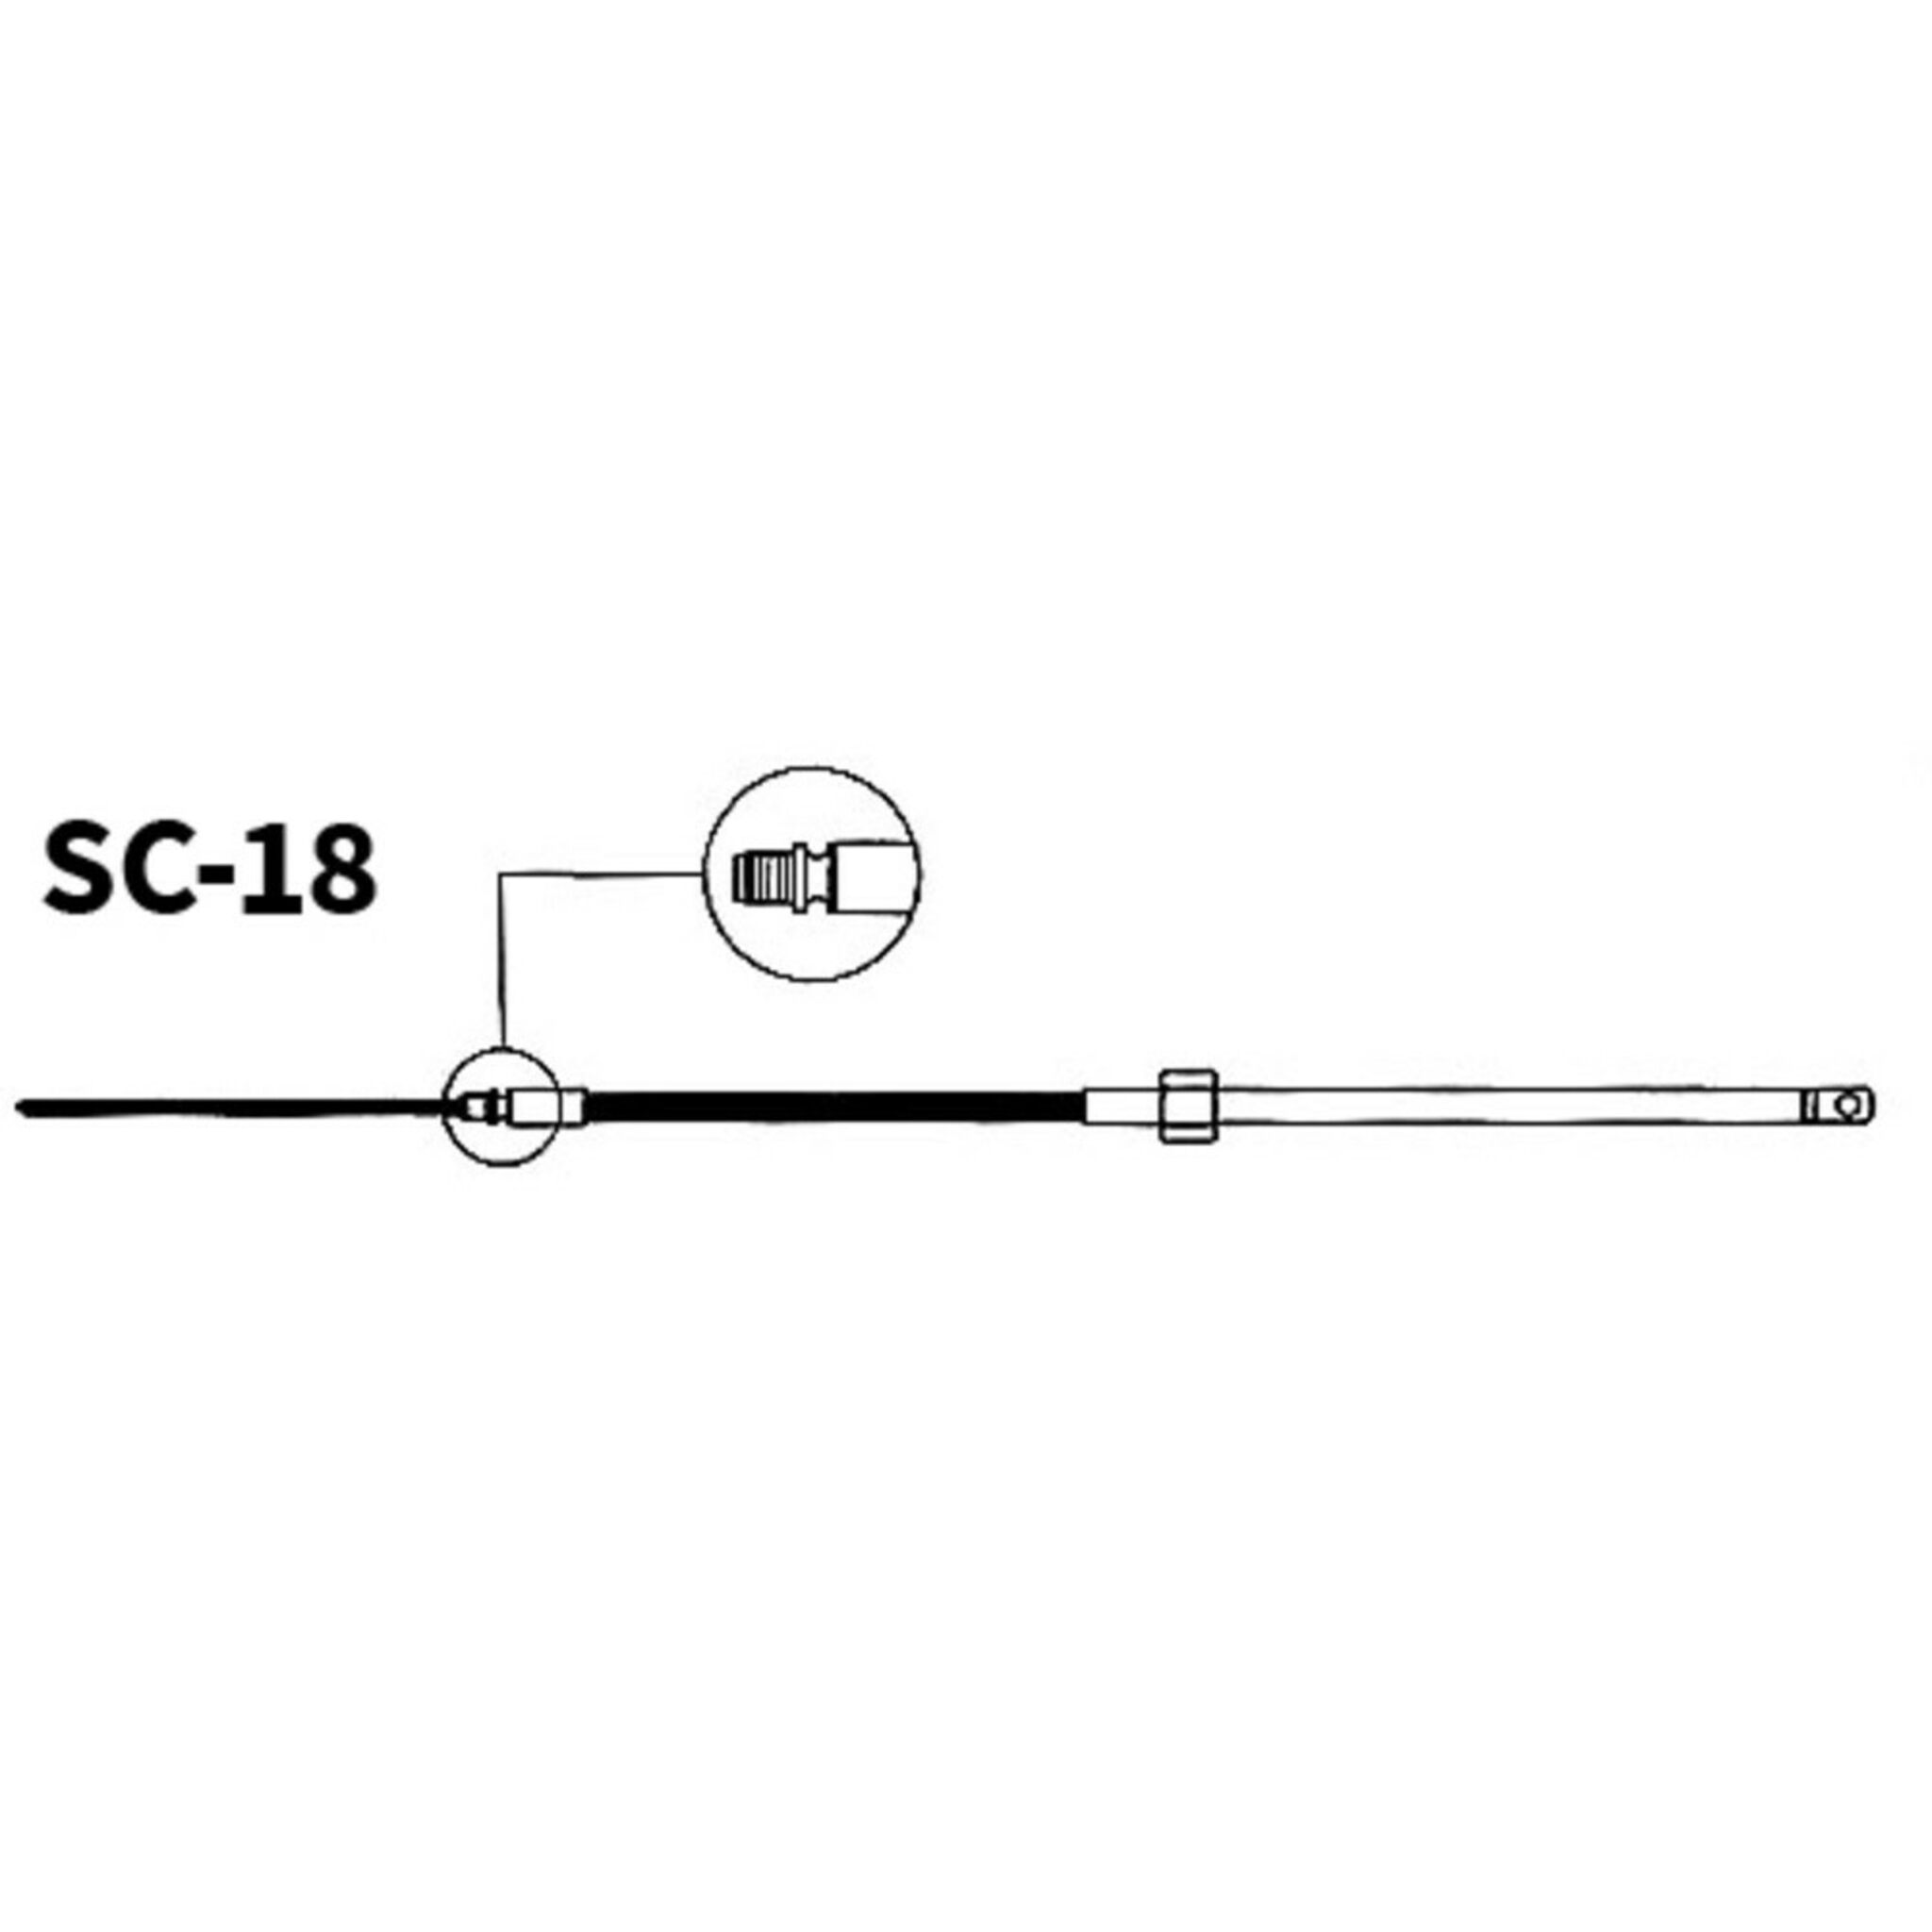 Multiflex Control Cable SC-18 for Multiflex Control Unit LM-H-201